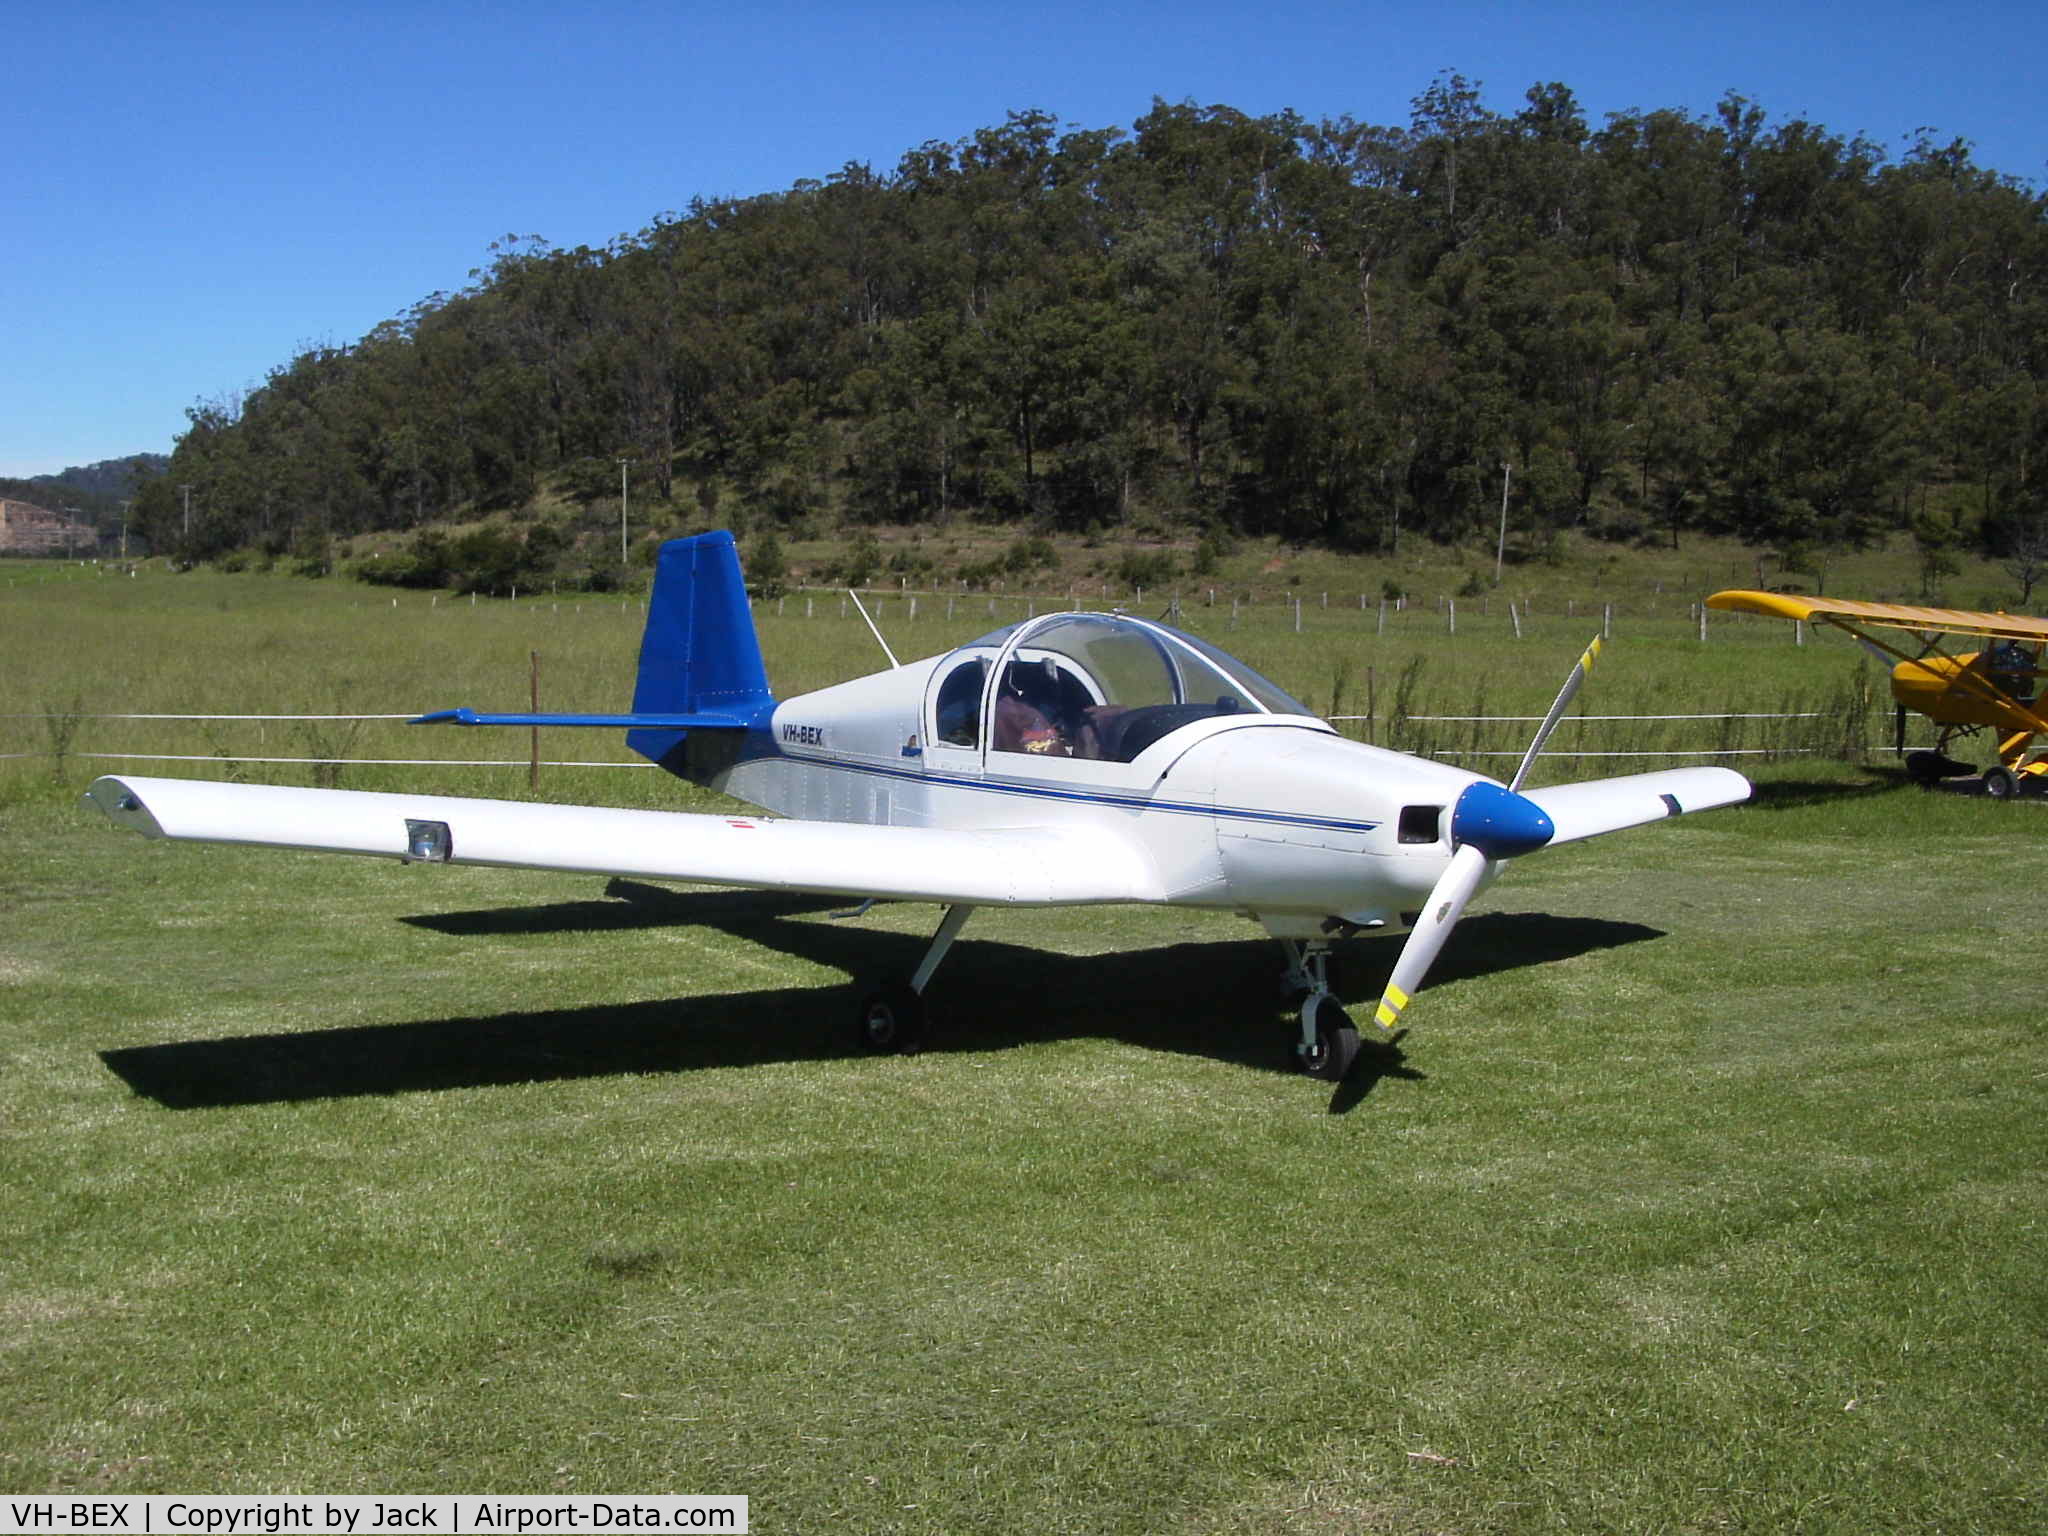 VH-BEX, 2004 Amateur Built Aircraft BRUMBY EXP C/N 004, Bermby EXperimental